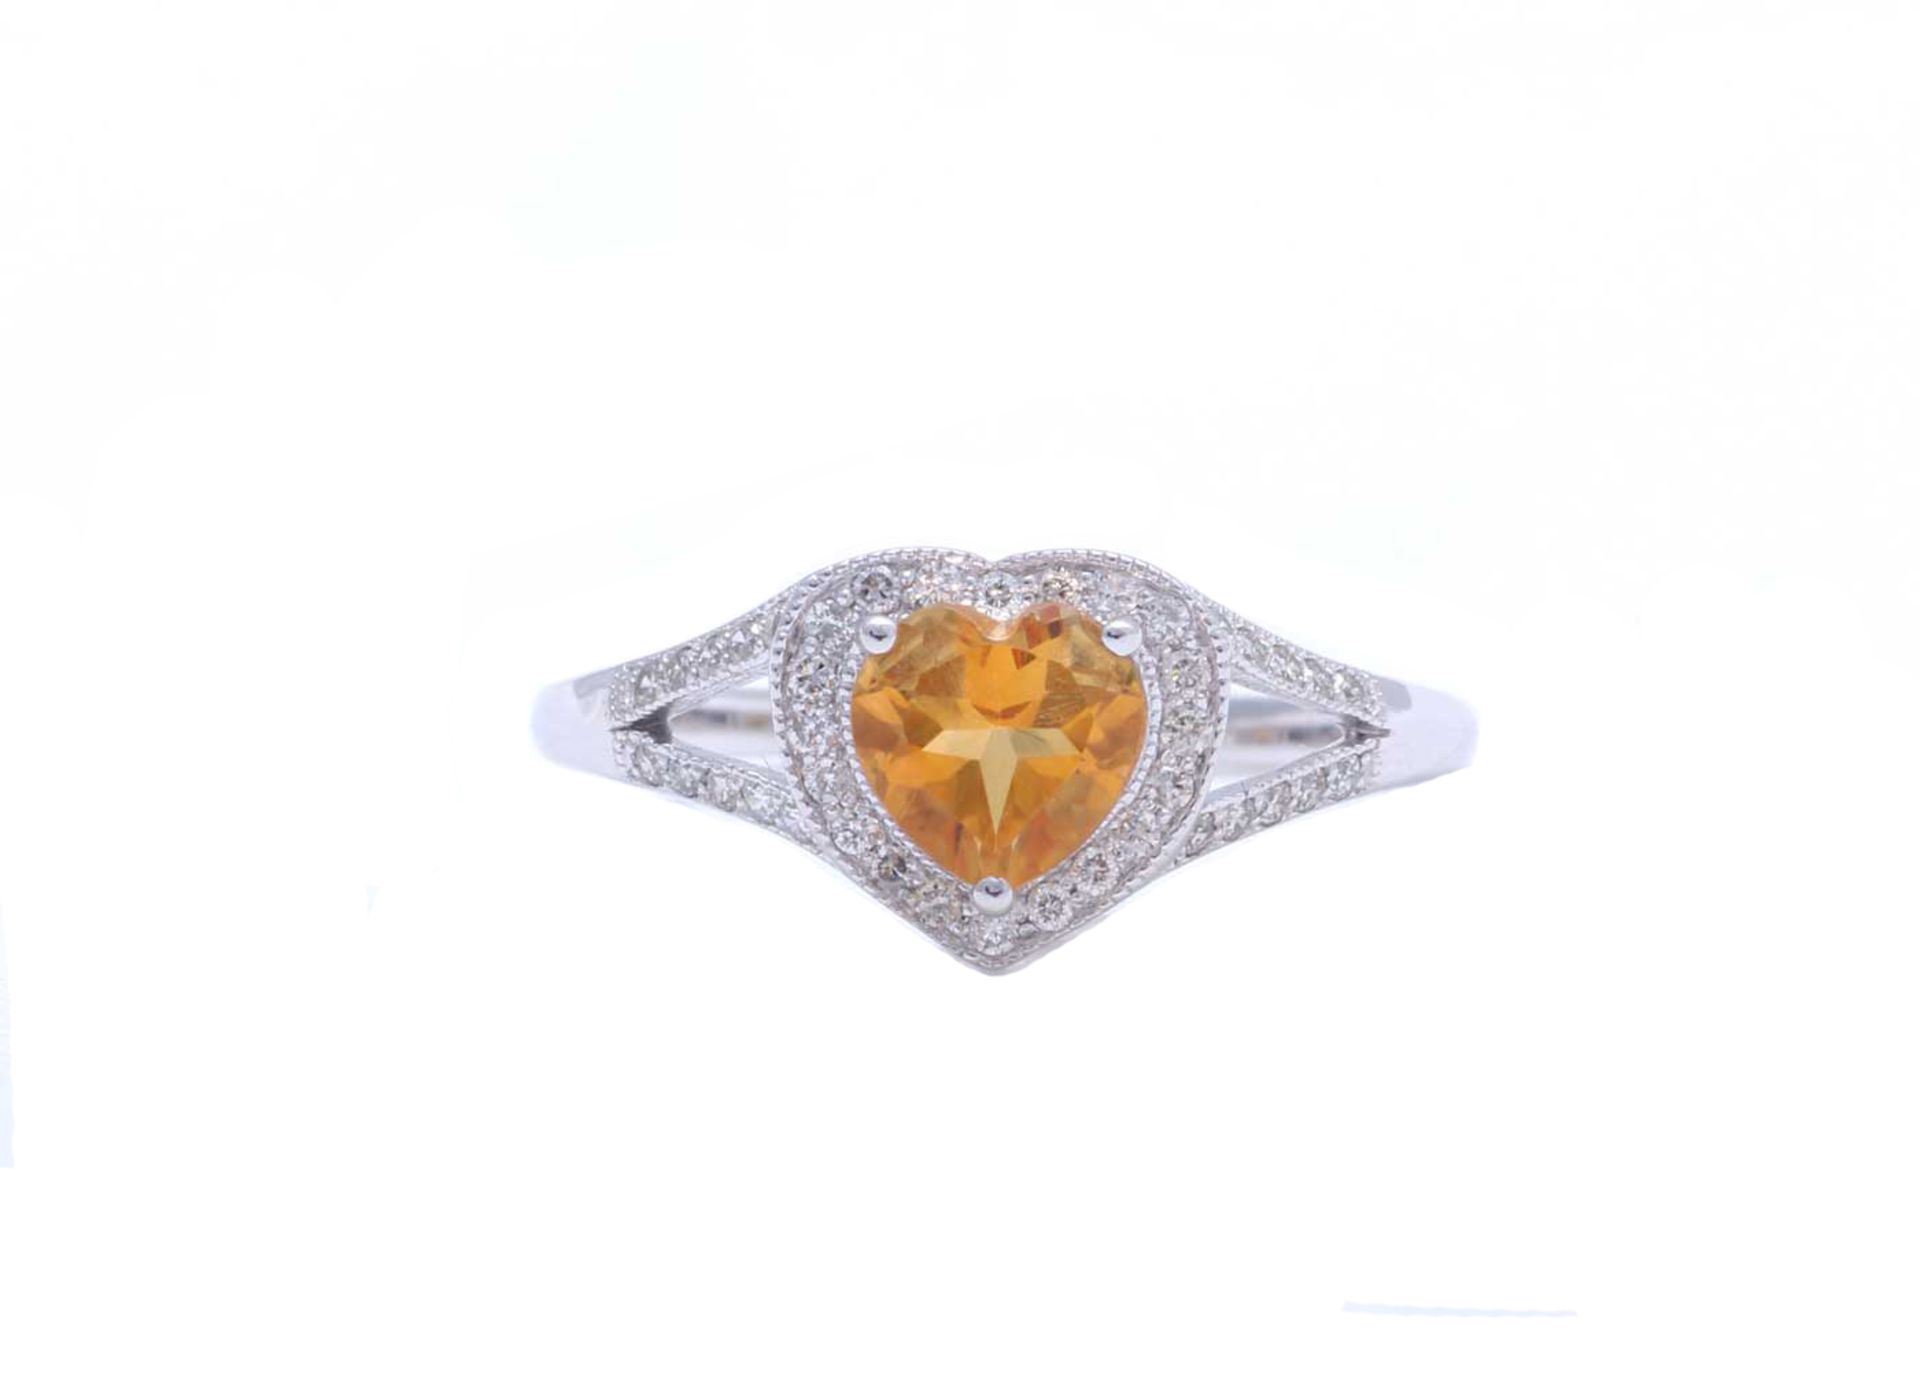 9ct White Gold Heart Shape Citrine Diamond Ring 0.20 Carats